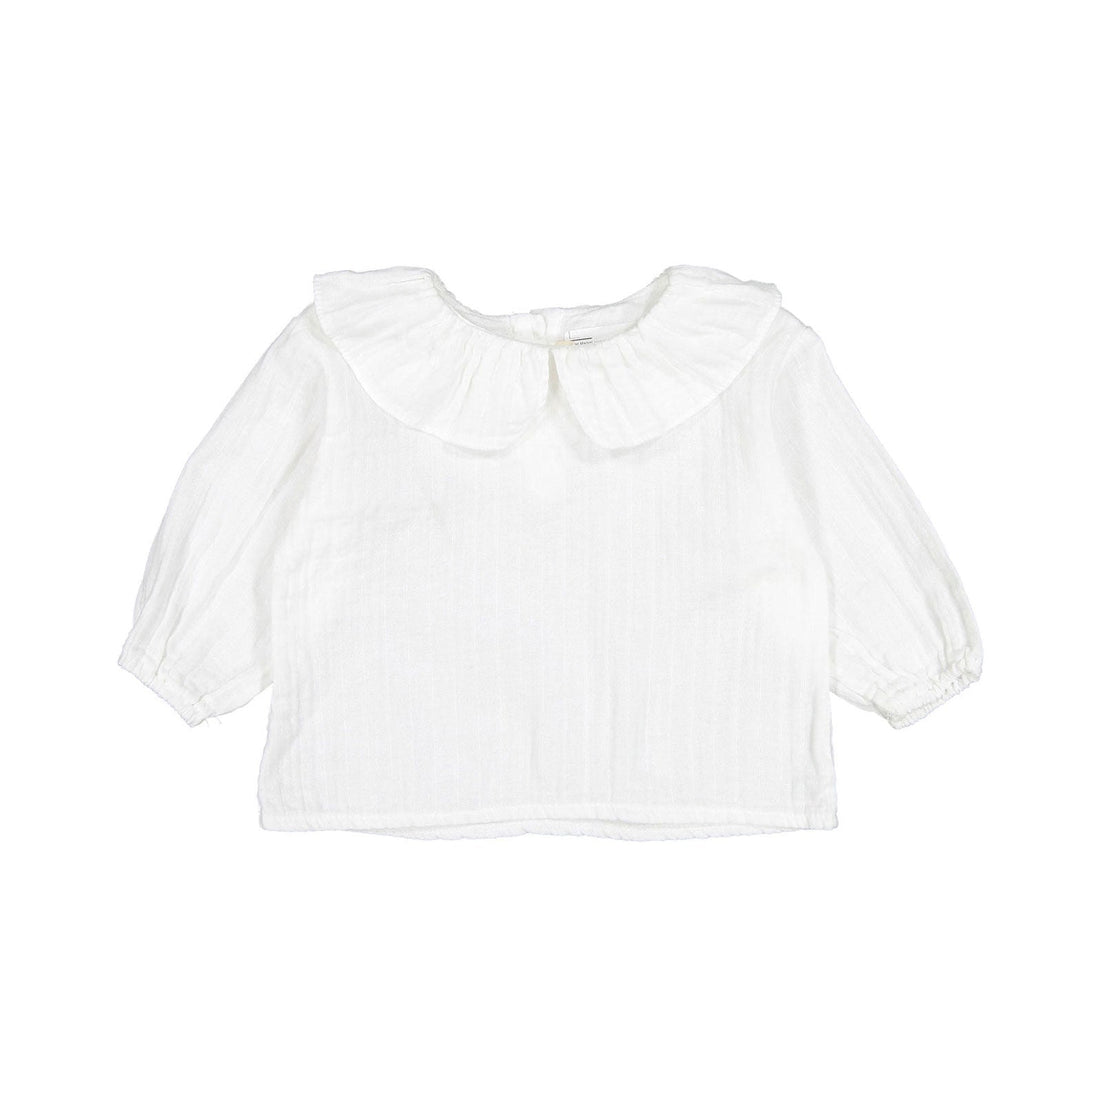 MIMI MARKET blouses Mimi Market Ivory Harmony Blouse